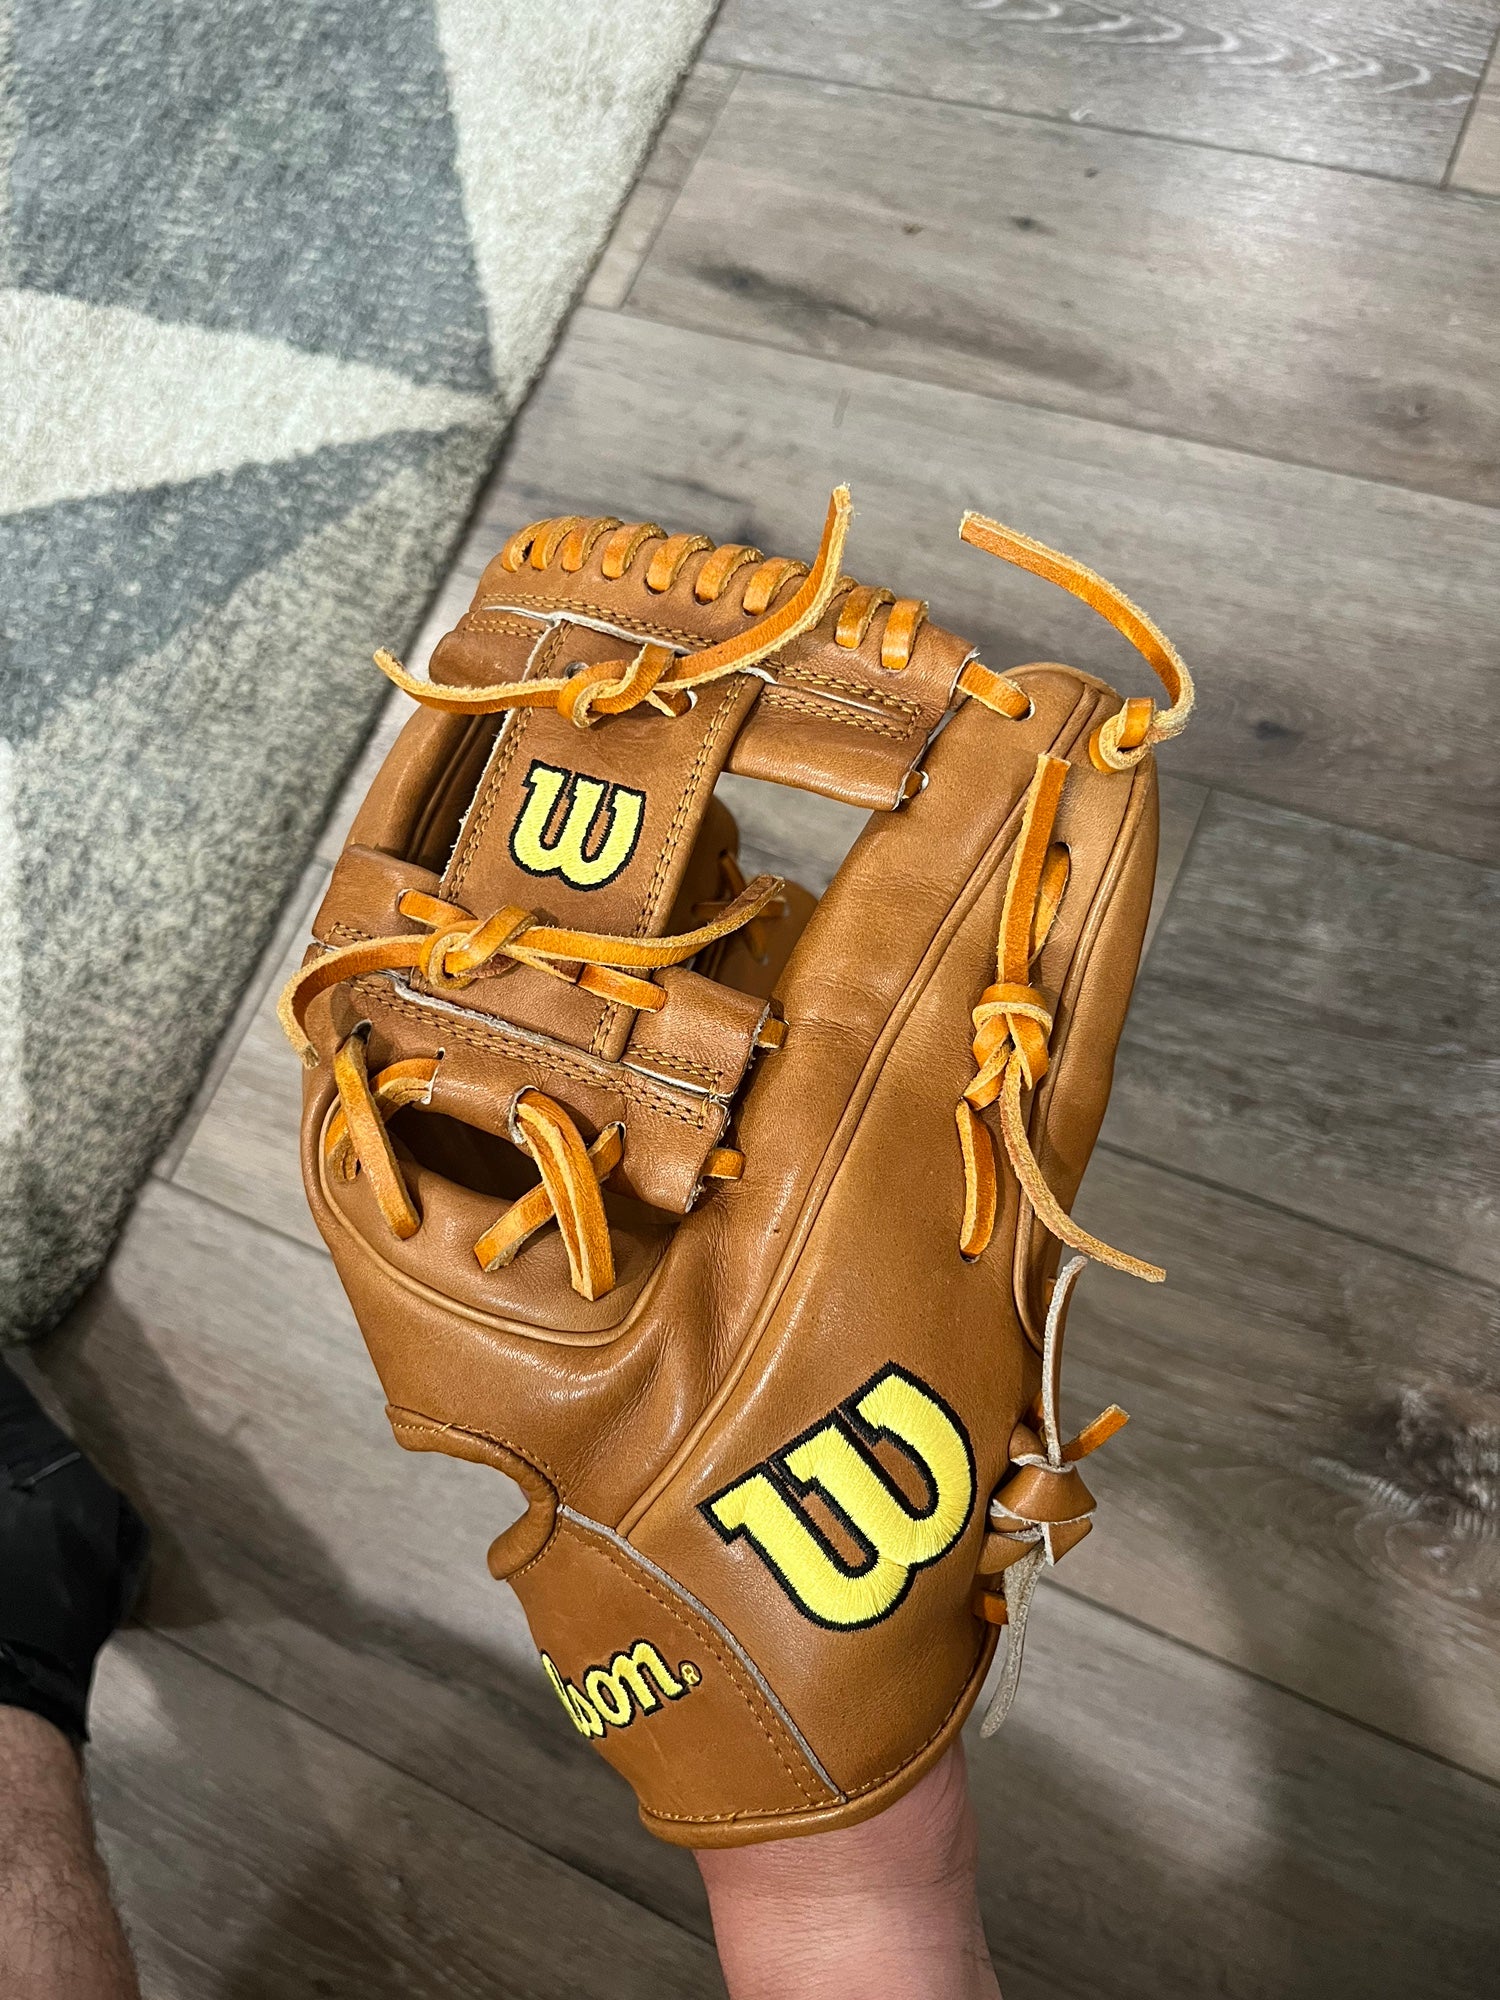 Wilson A2000 Ice DP15 11.5 Baseball Glove: WBW100795115